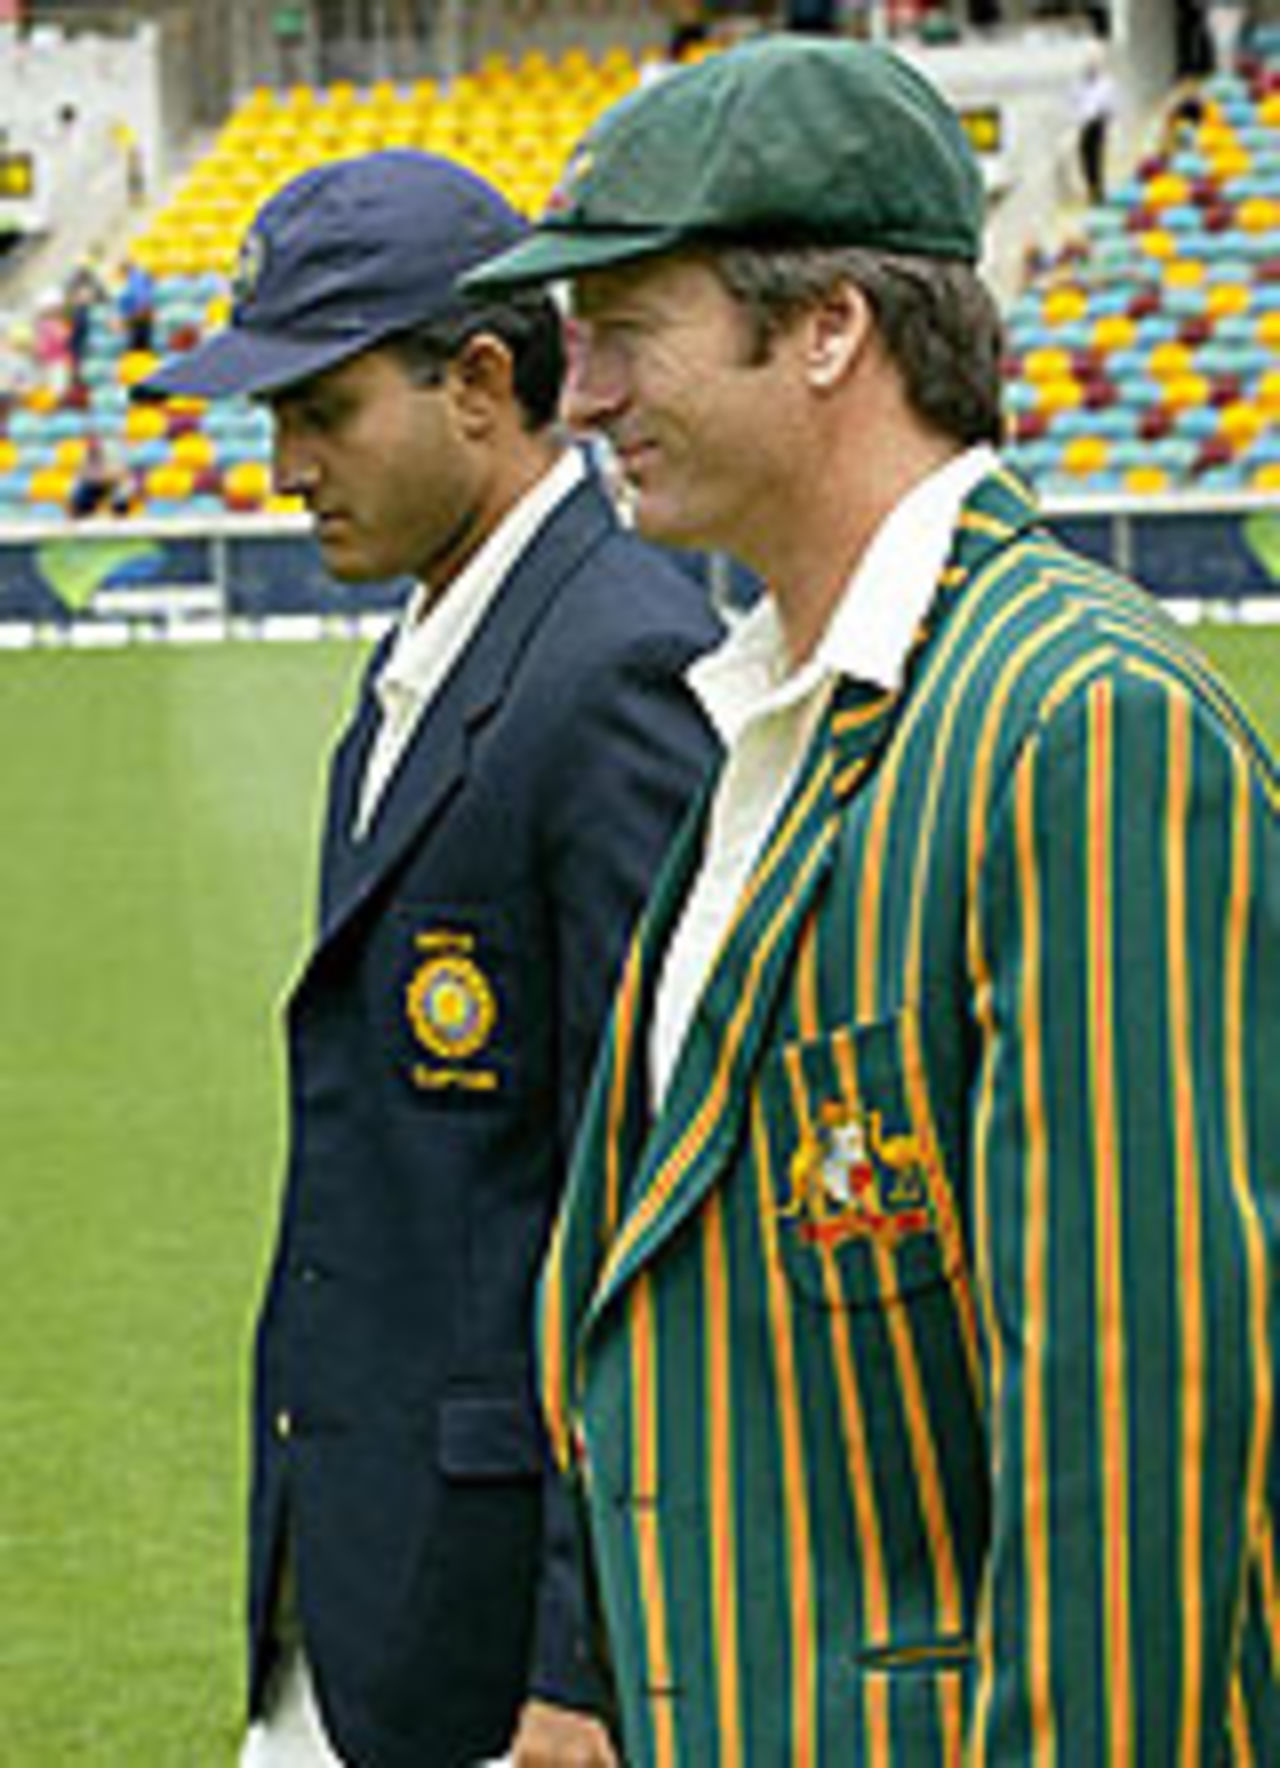 Steve Waugh and Saurav Ganguly walk out for toss - 1st Test Brisbane